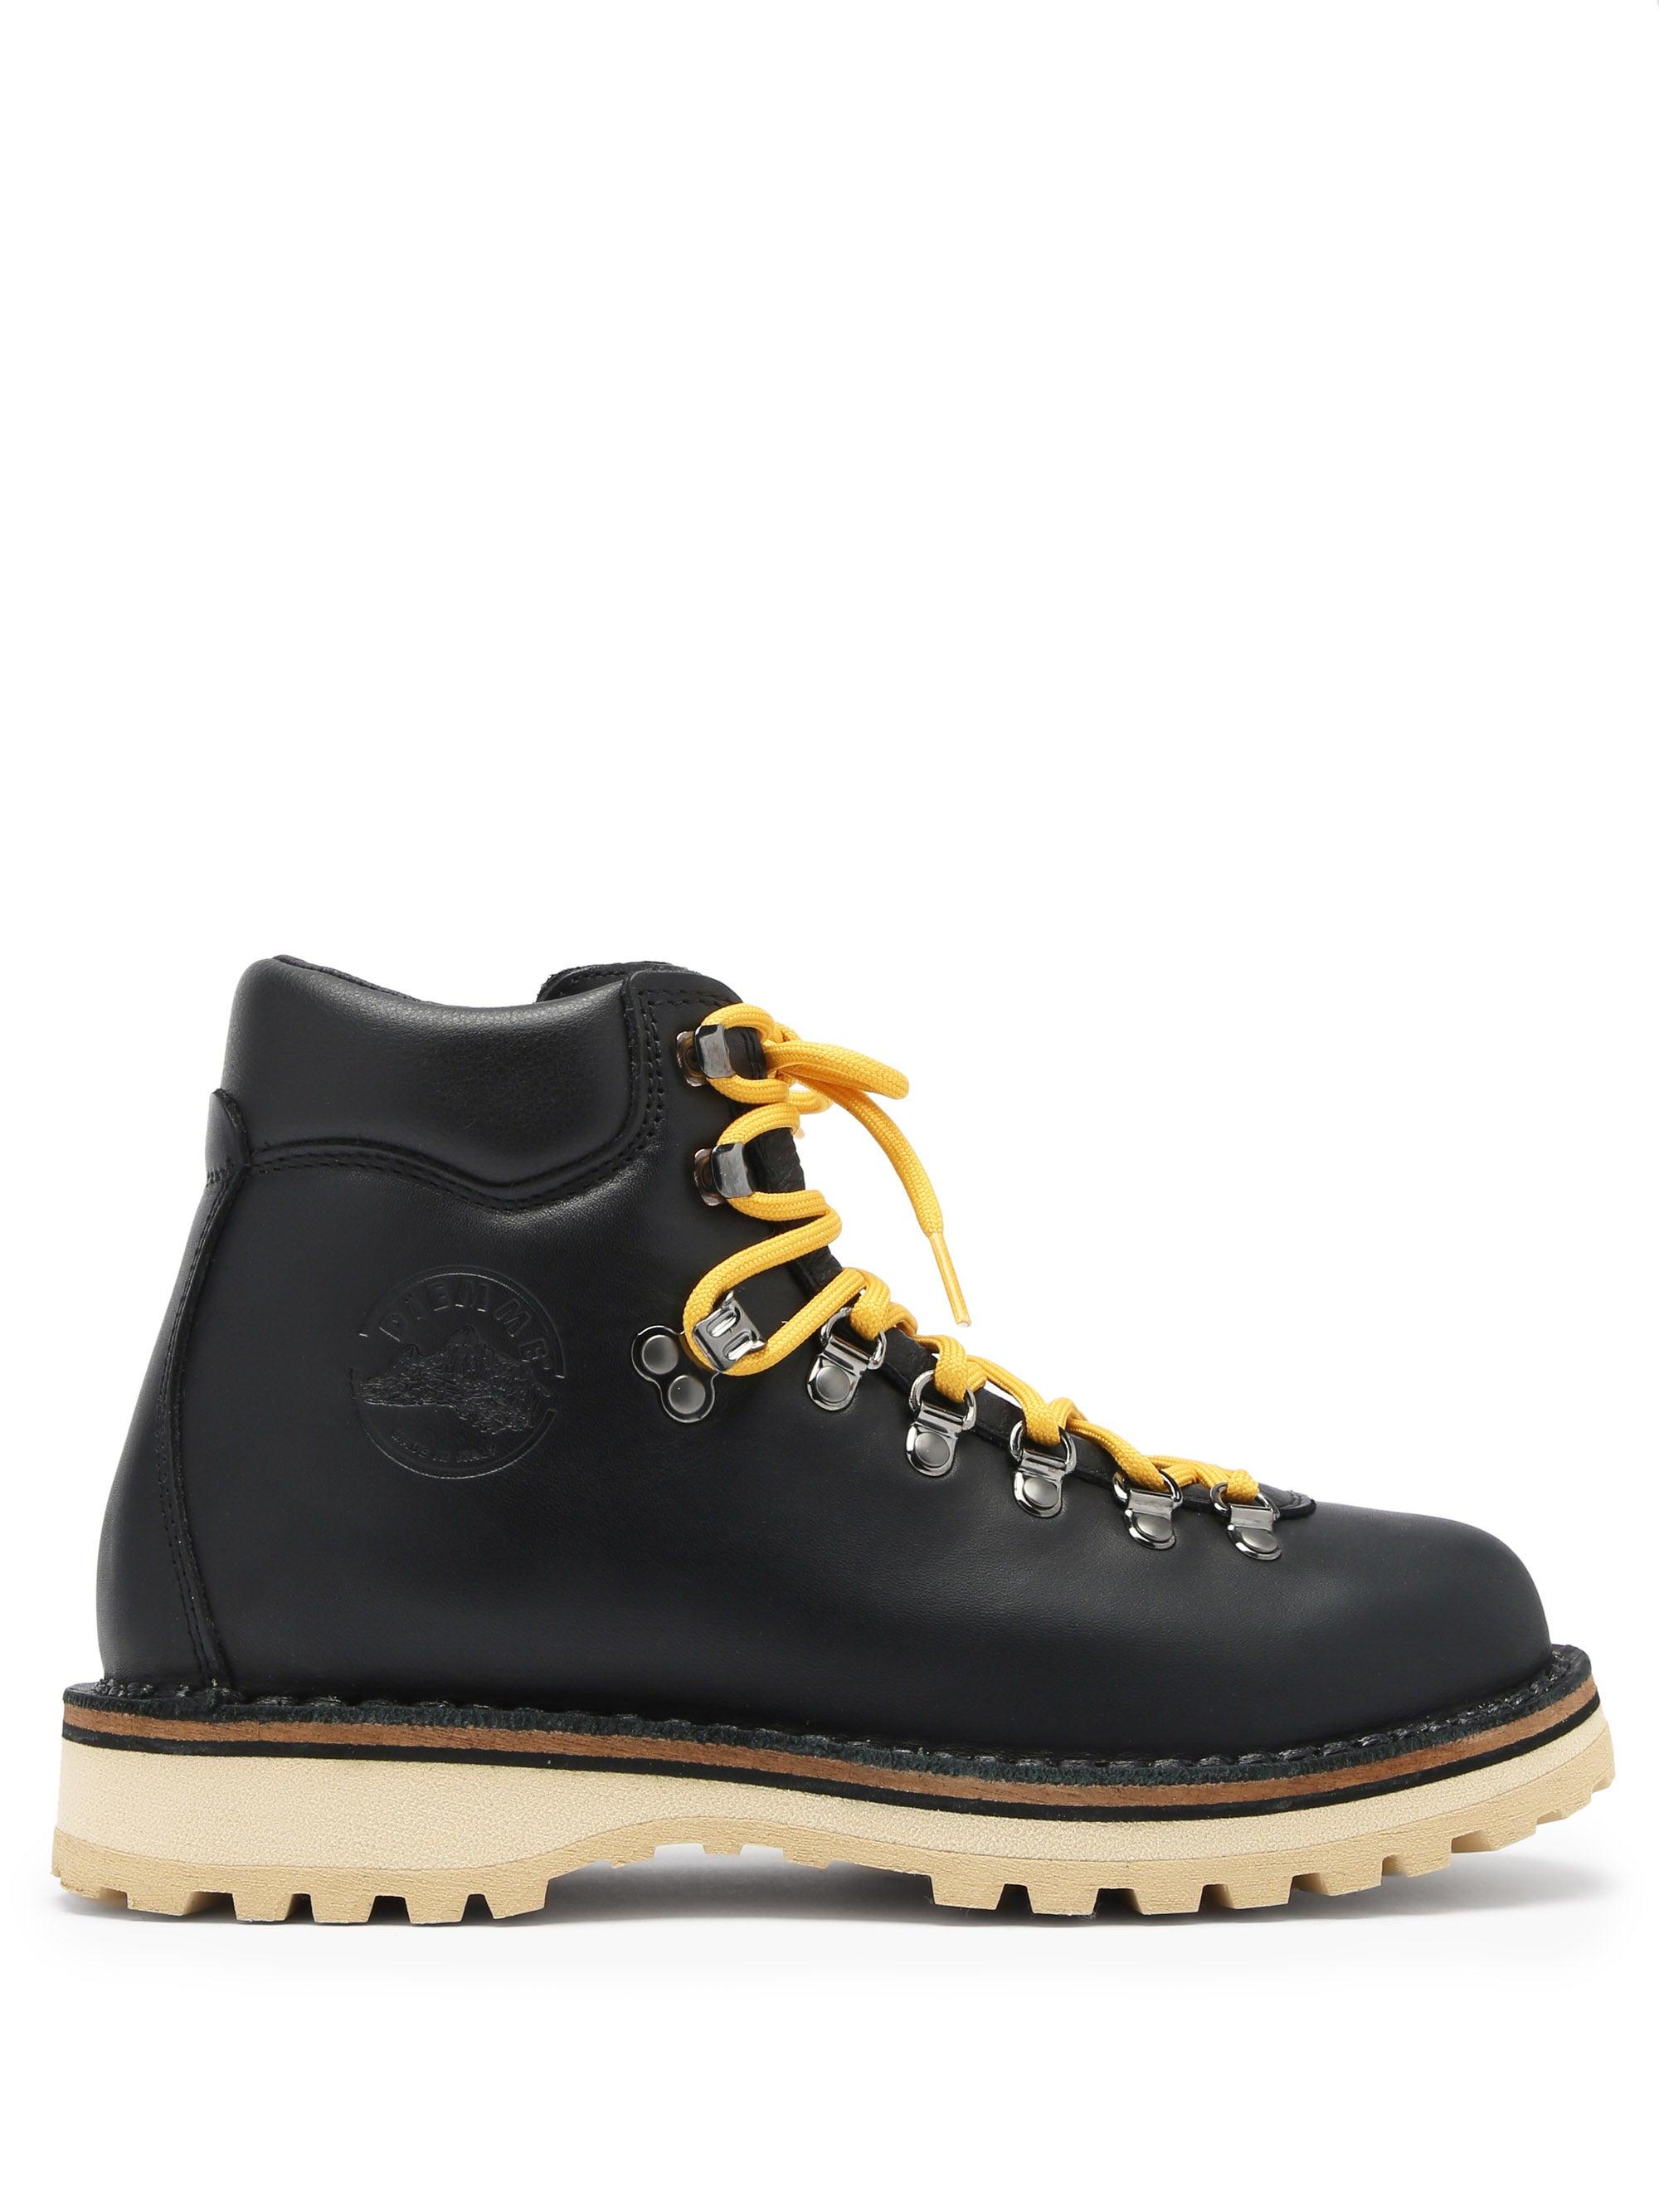 Diemme Roccia Vet Leather Hiking Boots in Black - Lyst